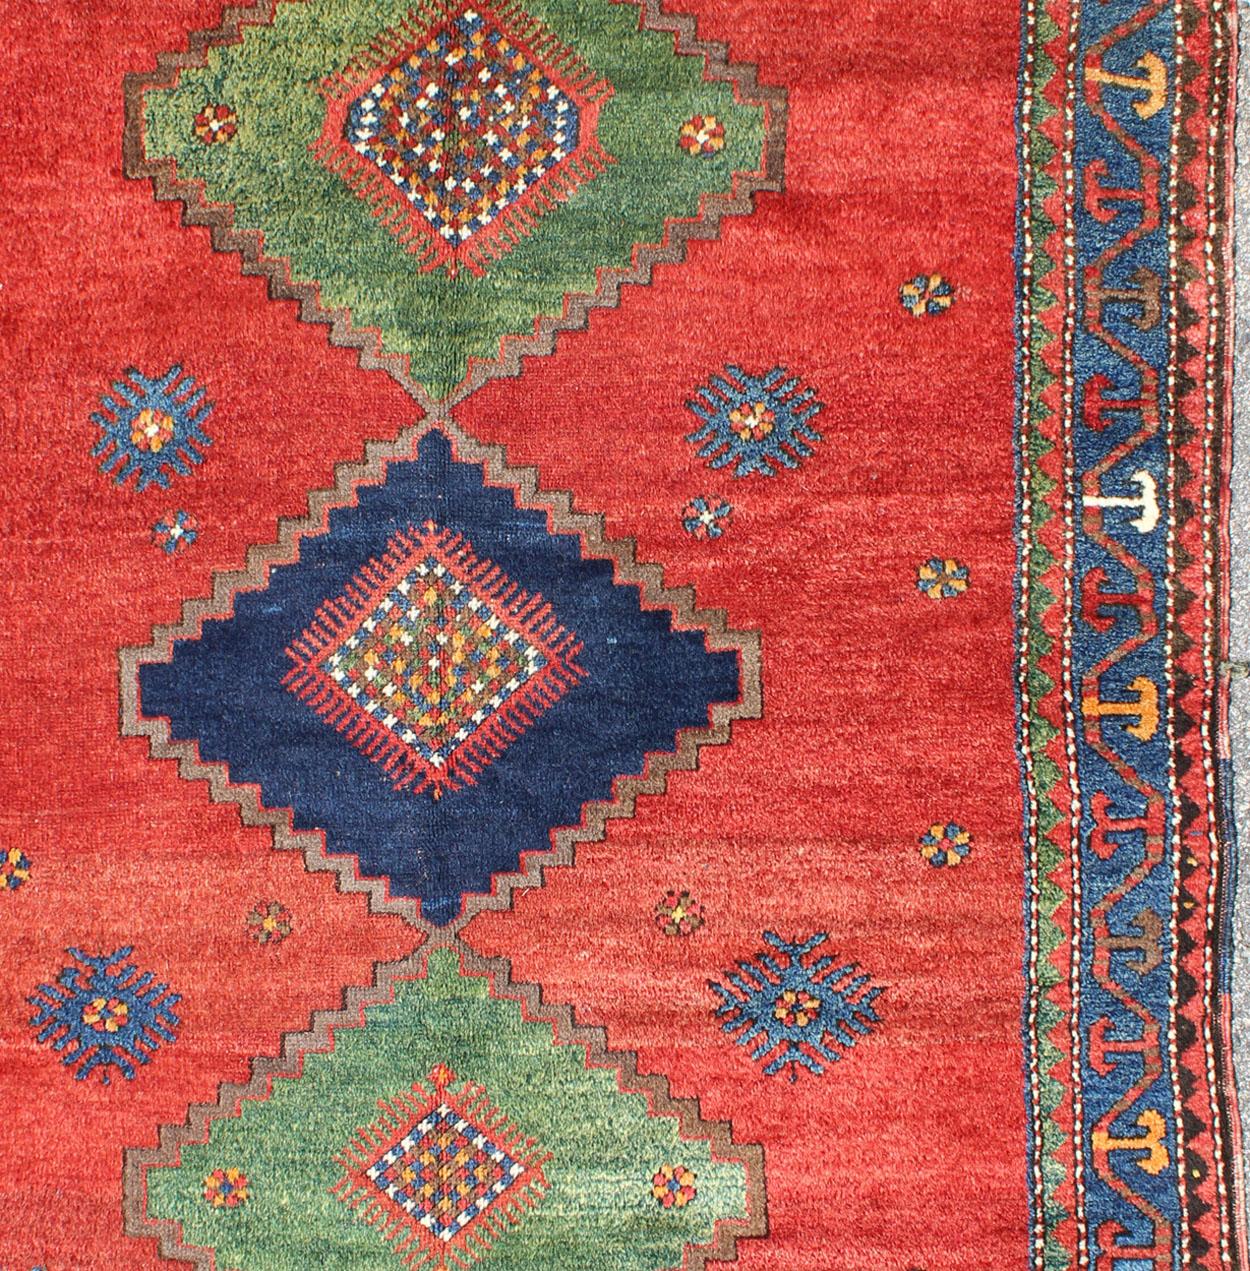 Tribal geometric medallion design Kazak rug antique from Caucasus Region in multi-colors. Keivan Woven Arts / rug 17-0910, country of origin / type: Iran / Caucasian Kazak, circa 1900.
Measures:4'8 x 6'4.
Brilliant Kazak rugs are among the most